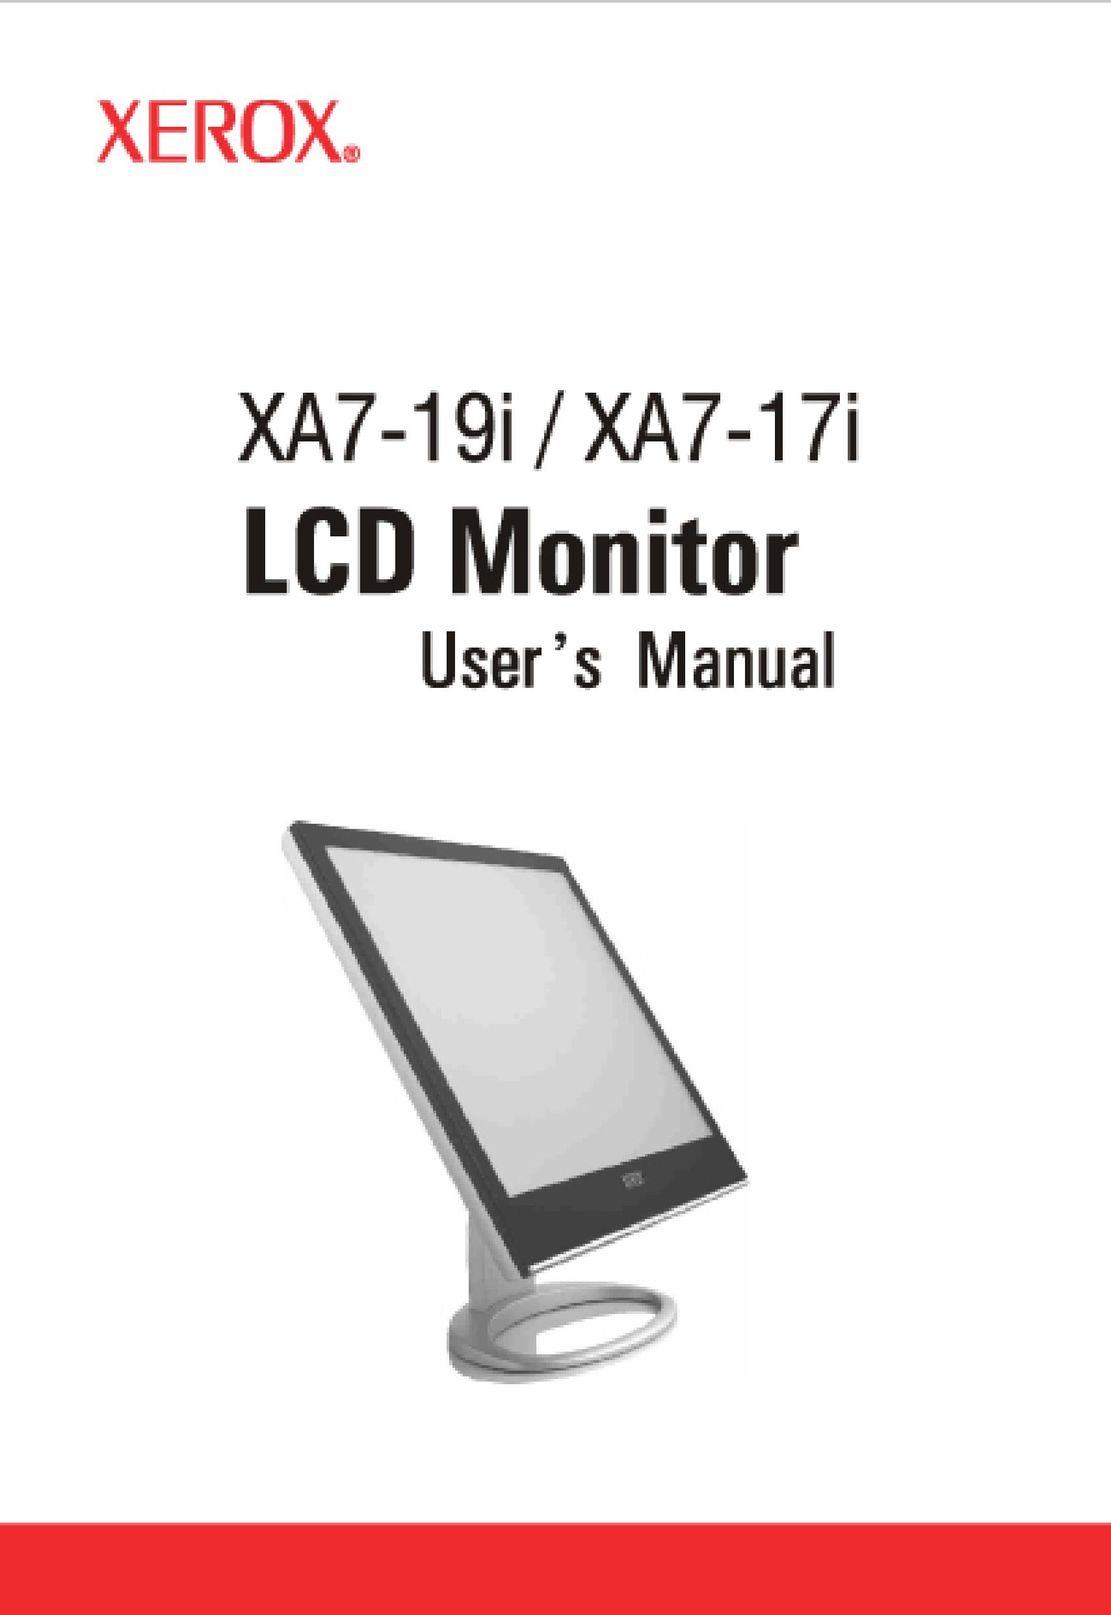 Xerox XA7-19i Computer Monitor User Manual